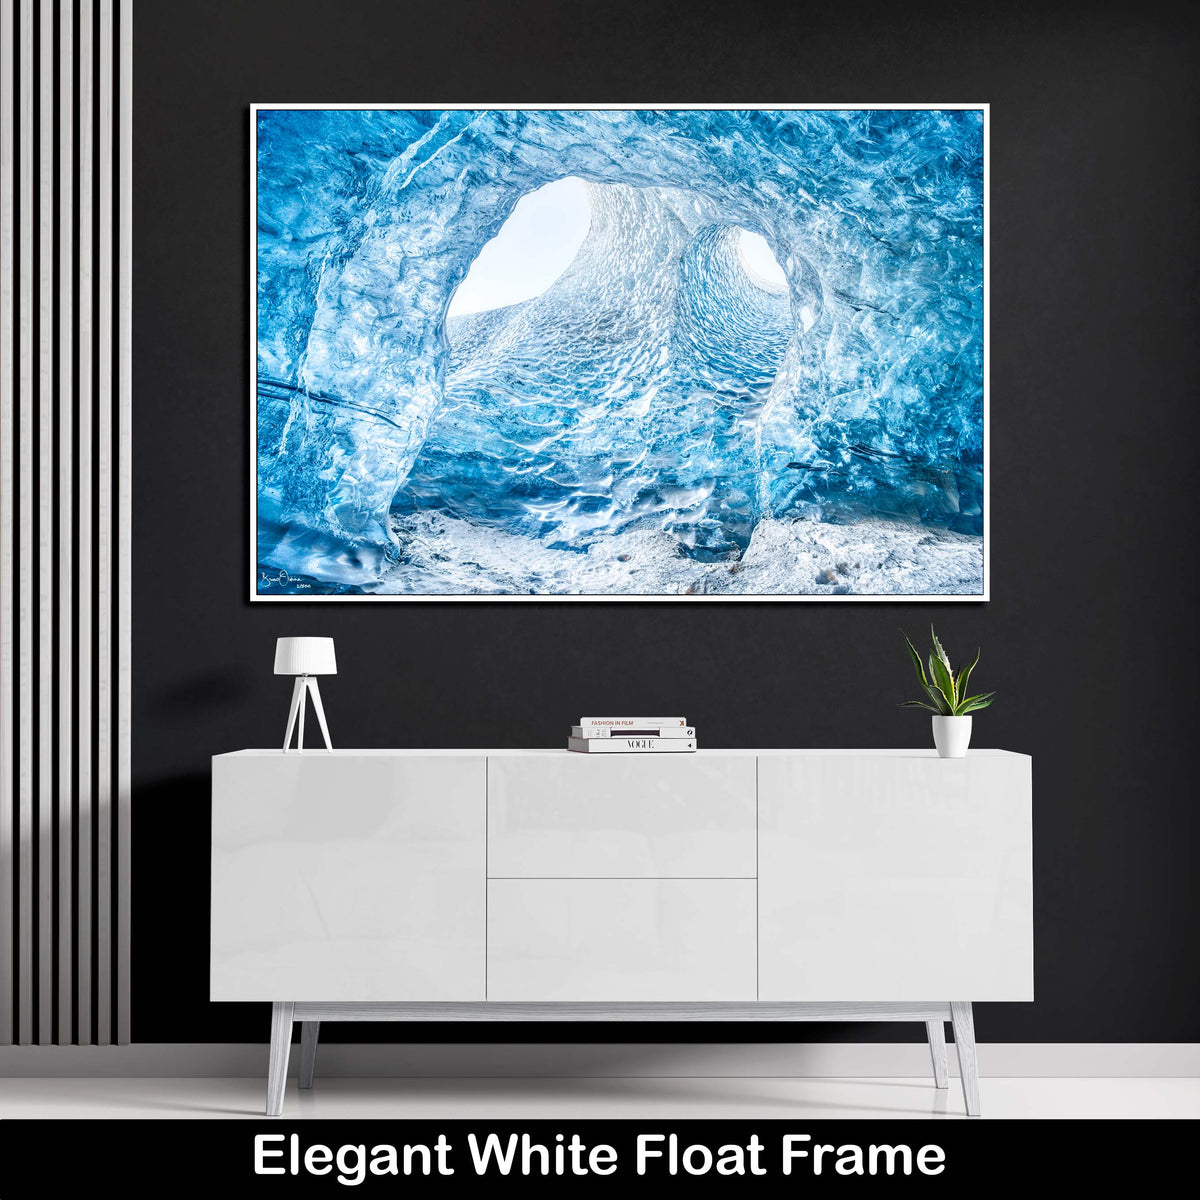 Abstract-Modern Elegant Float Frame-Wall-Art-Ice-Forms-Patterns-Dark